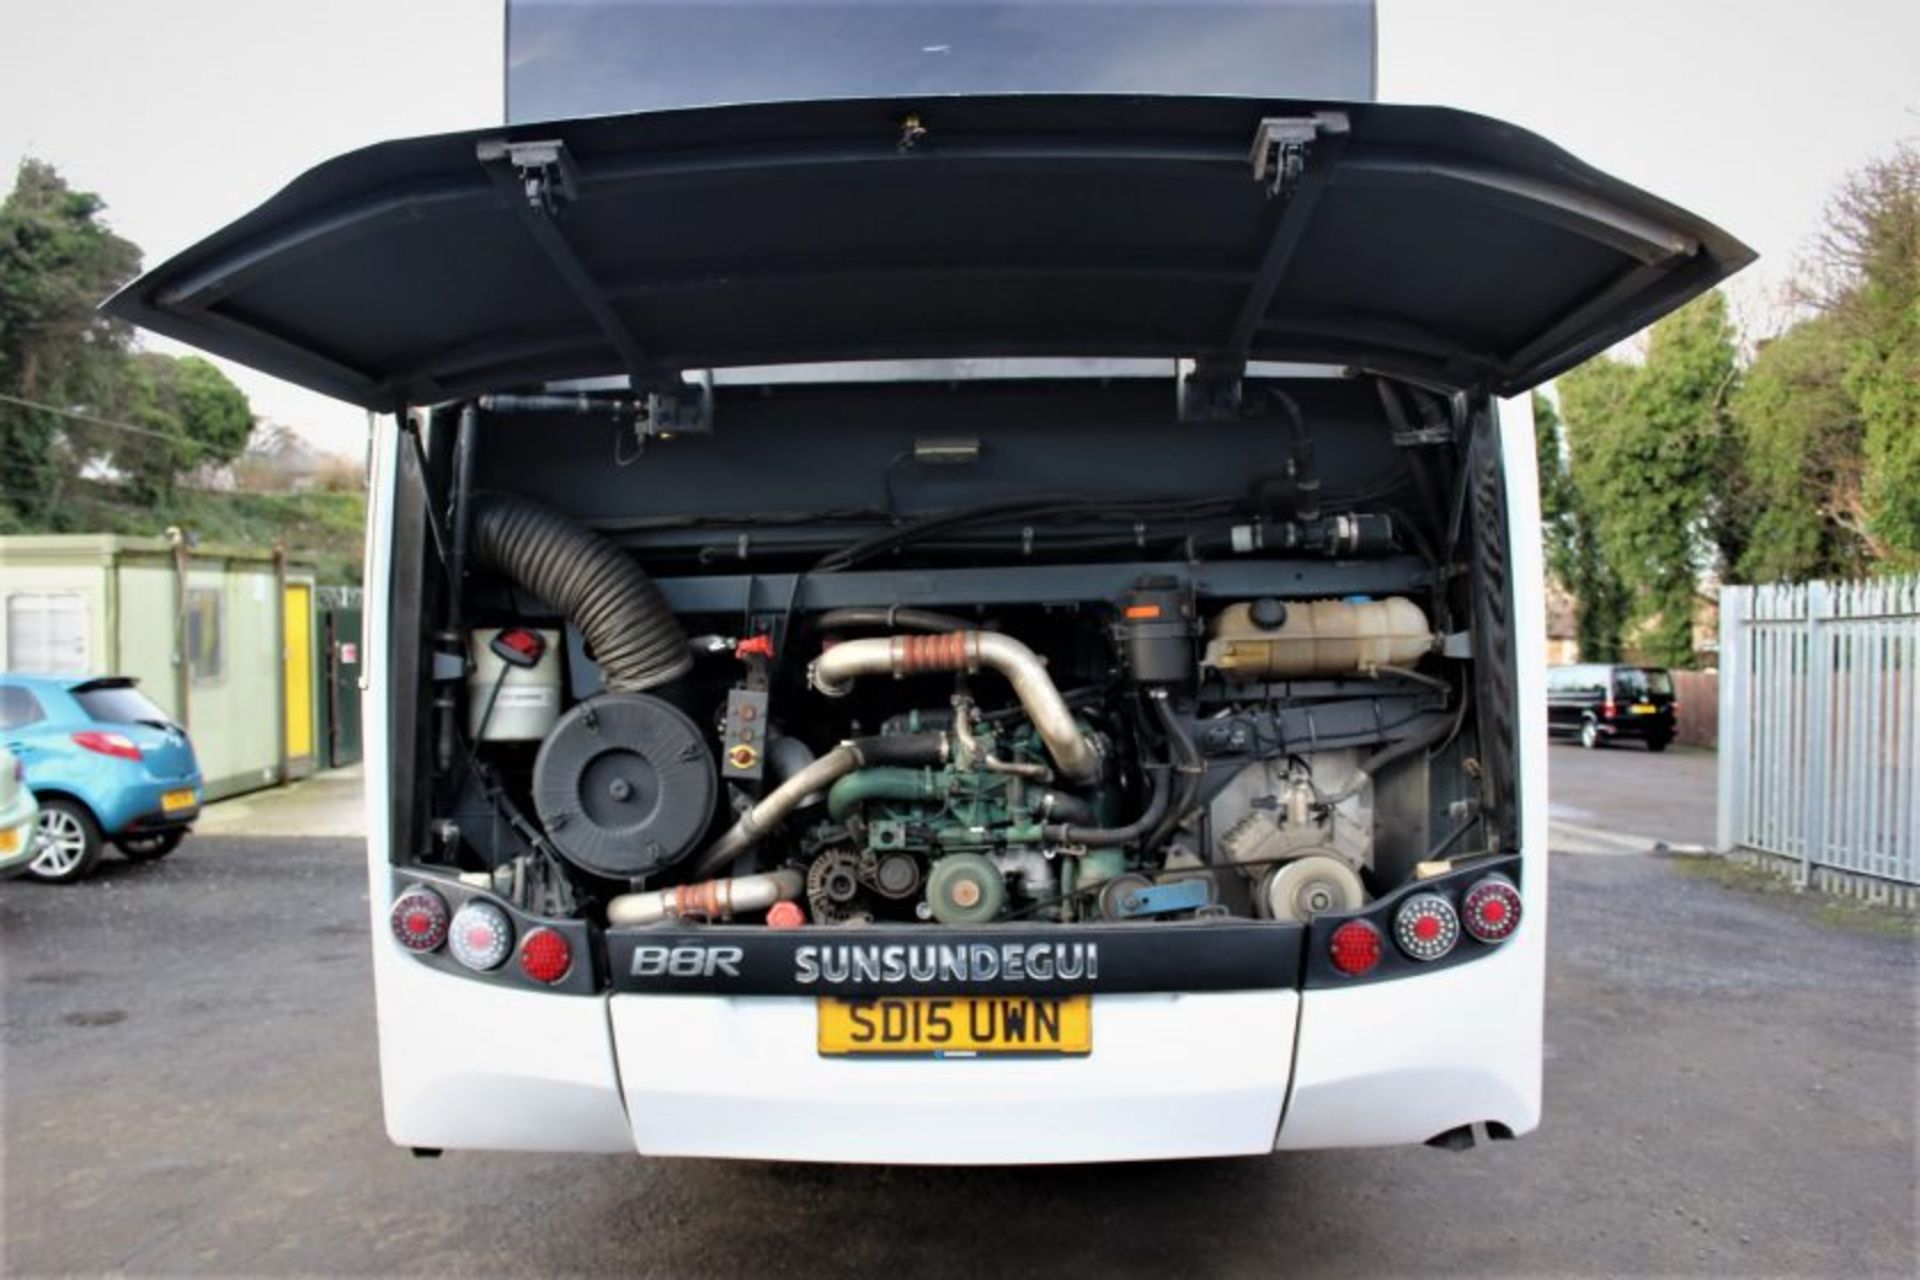 2015 | Volvo SunSundegui 41 Seater B8R SC5 Euro 6 Coach | Reg: SD15 UWN | 133,628 KMS - Image 8 of 19